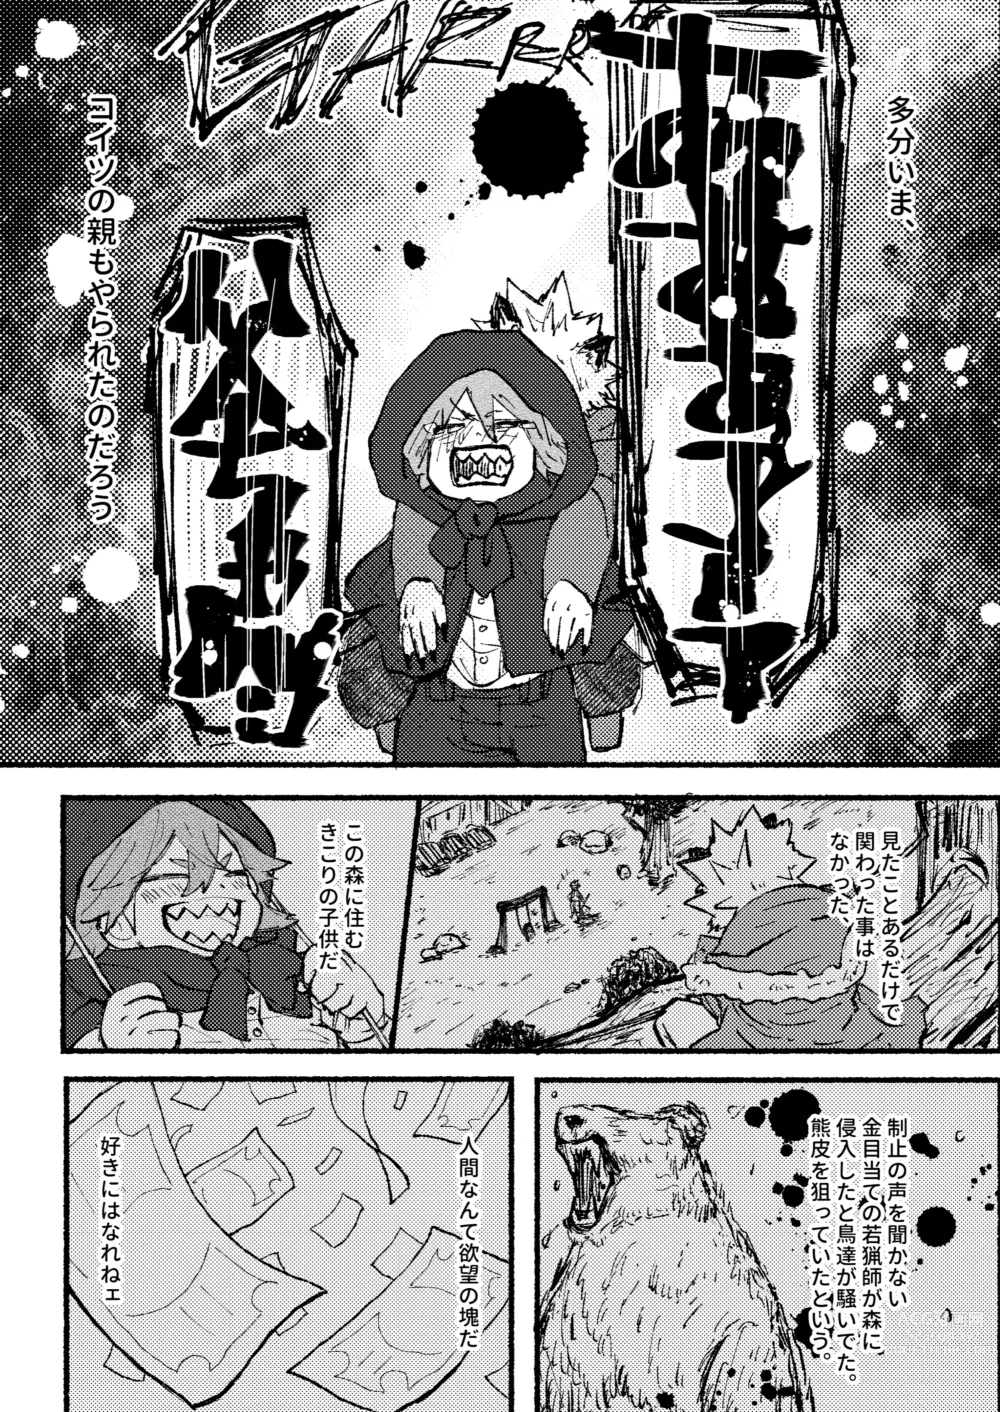 Page 6 of doujinshi Monopolize - You